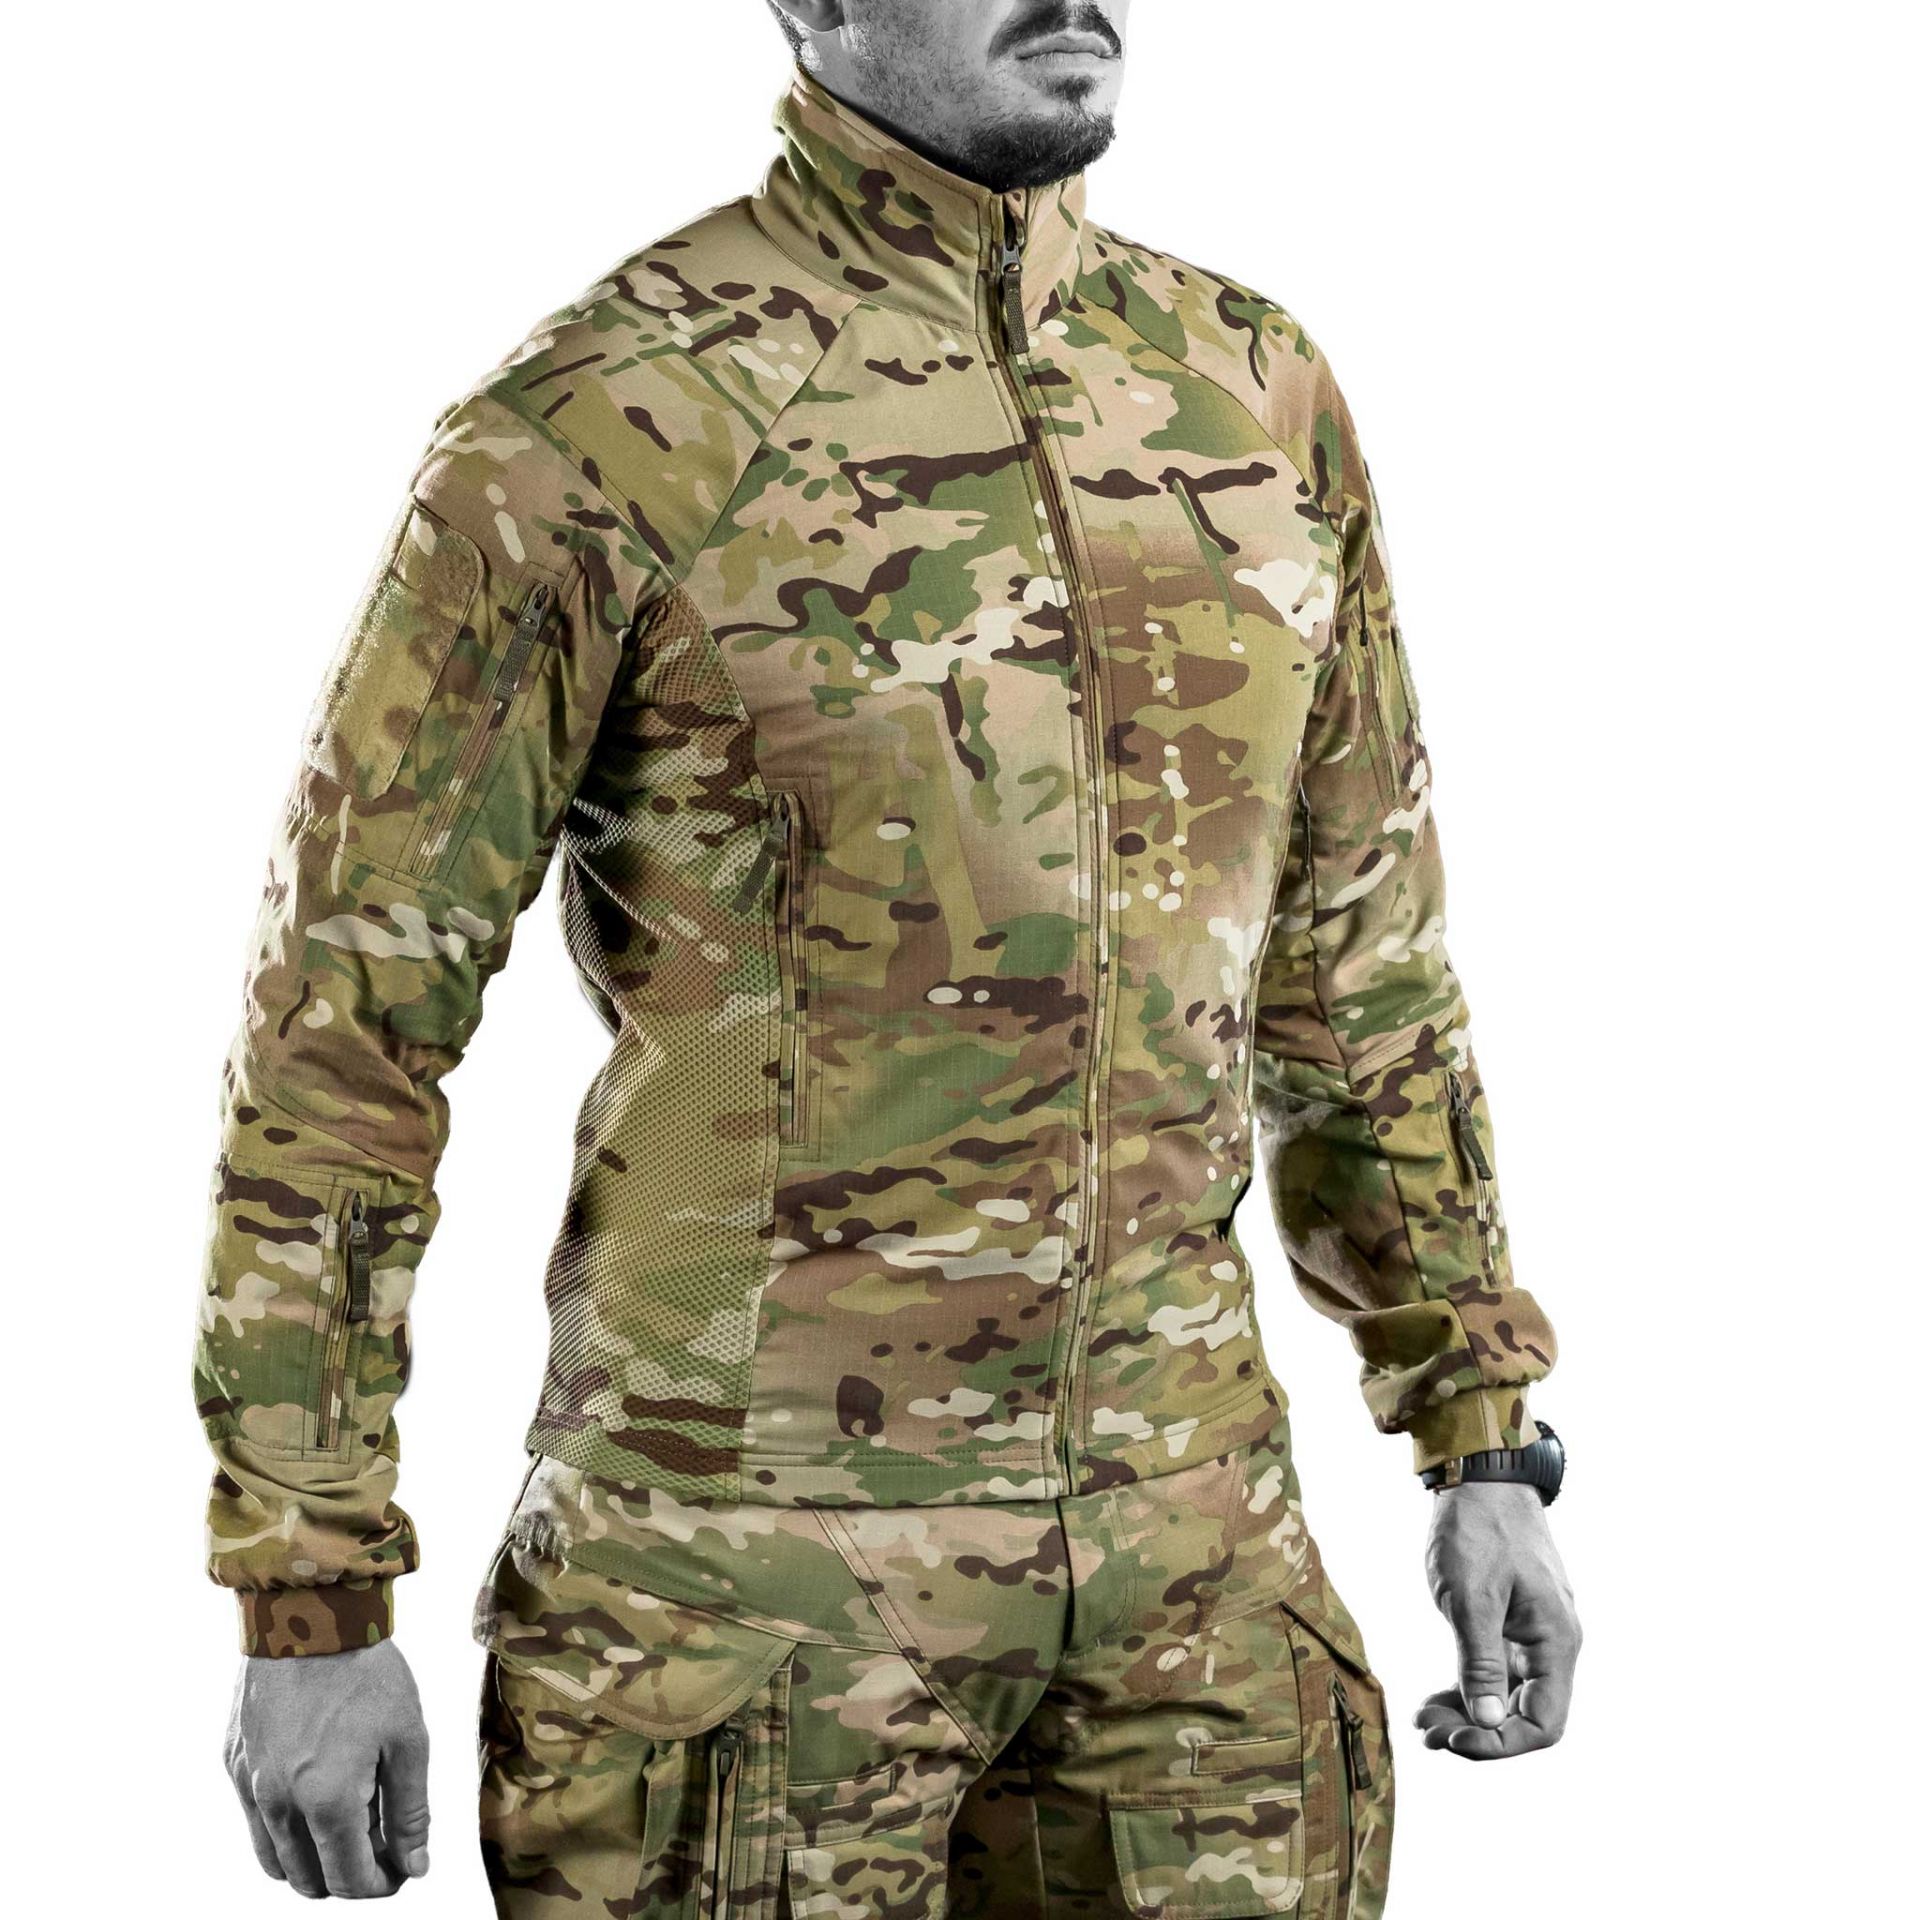 UF Pro Hunter FZ Gen 2 Tactical Softshell Jacket Steel Grey